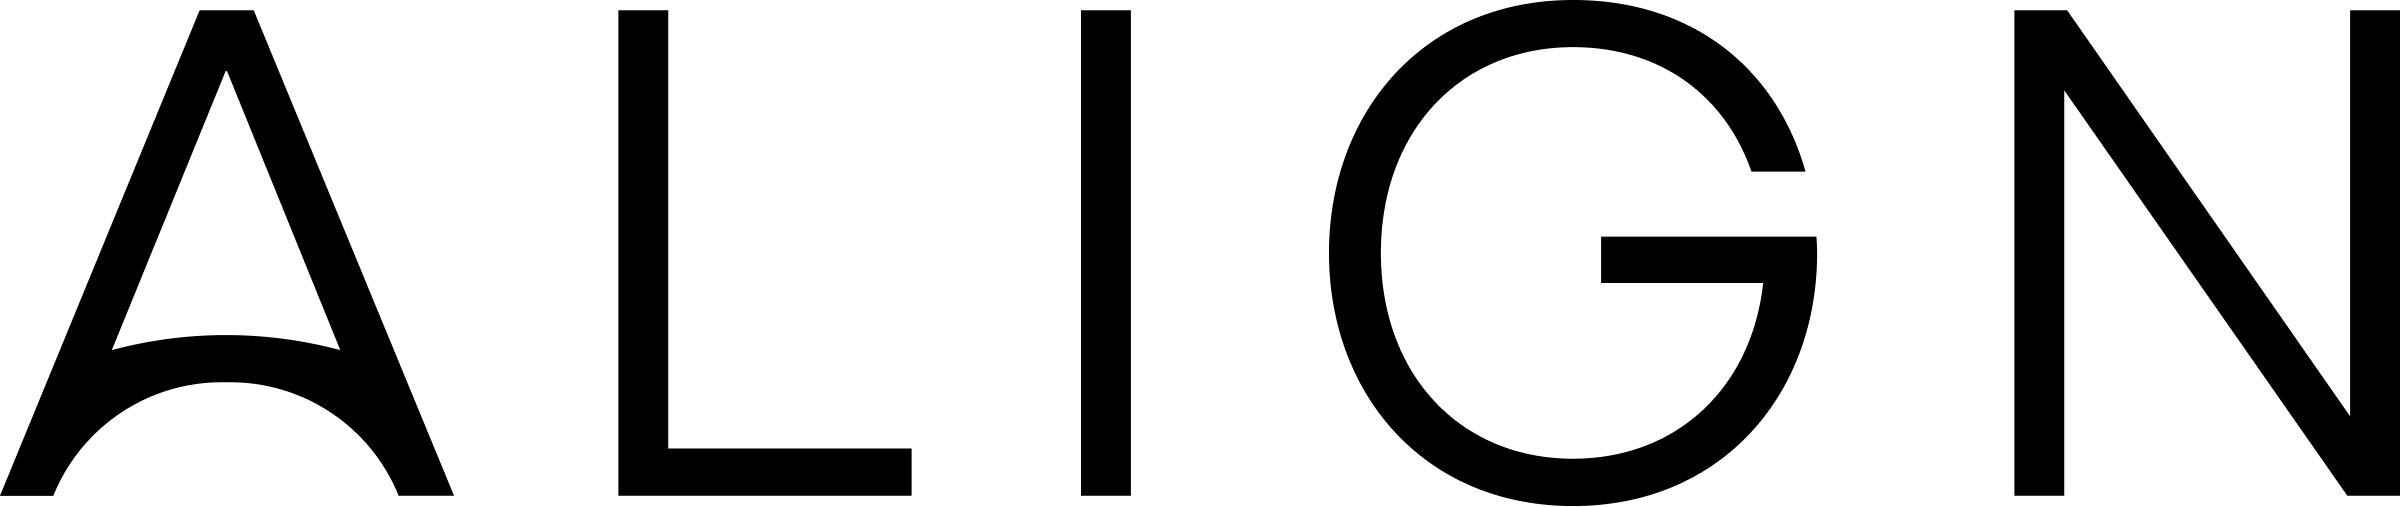 align logo